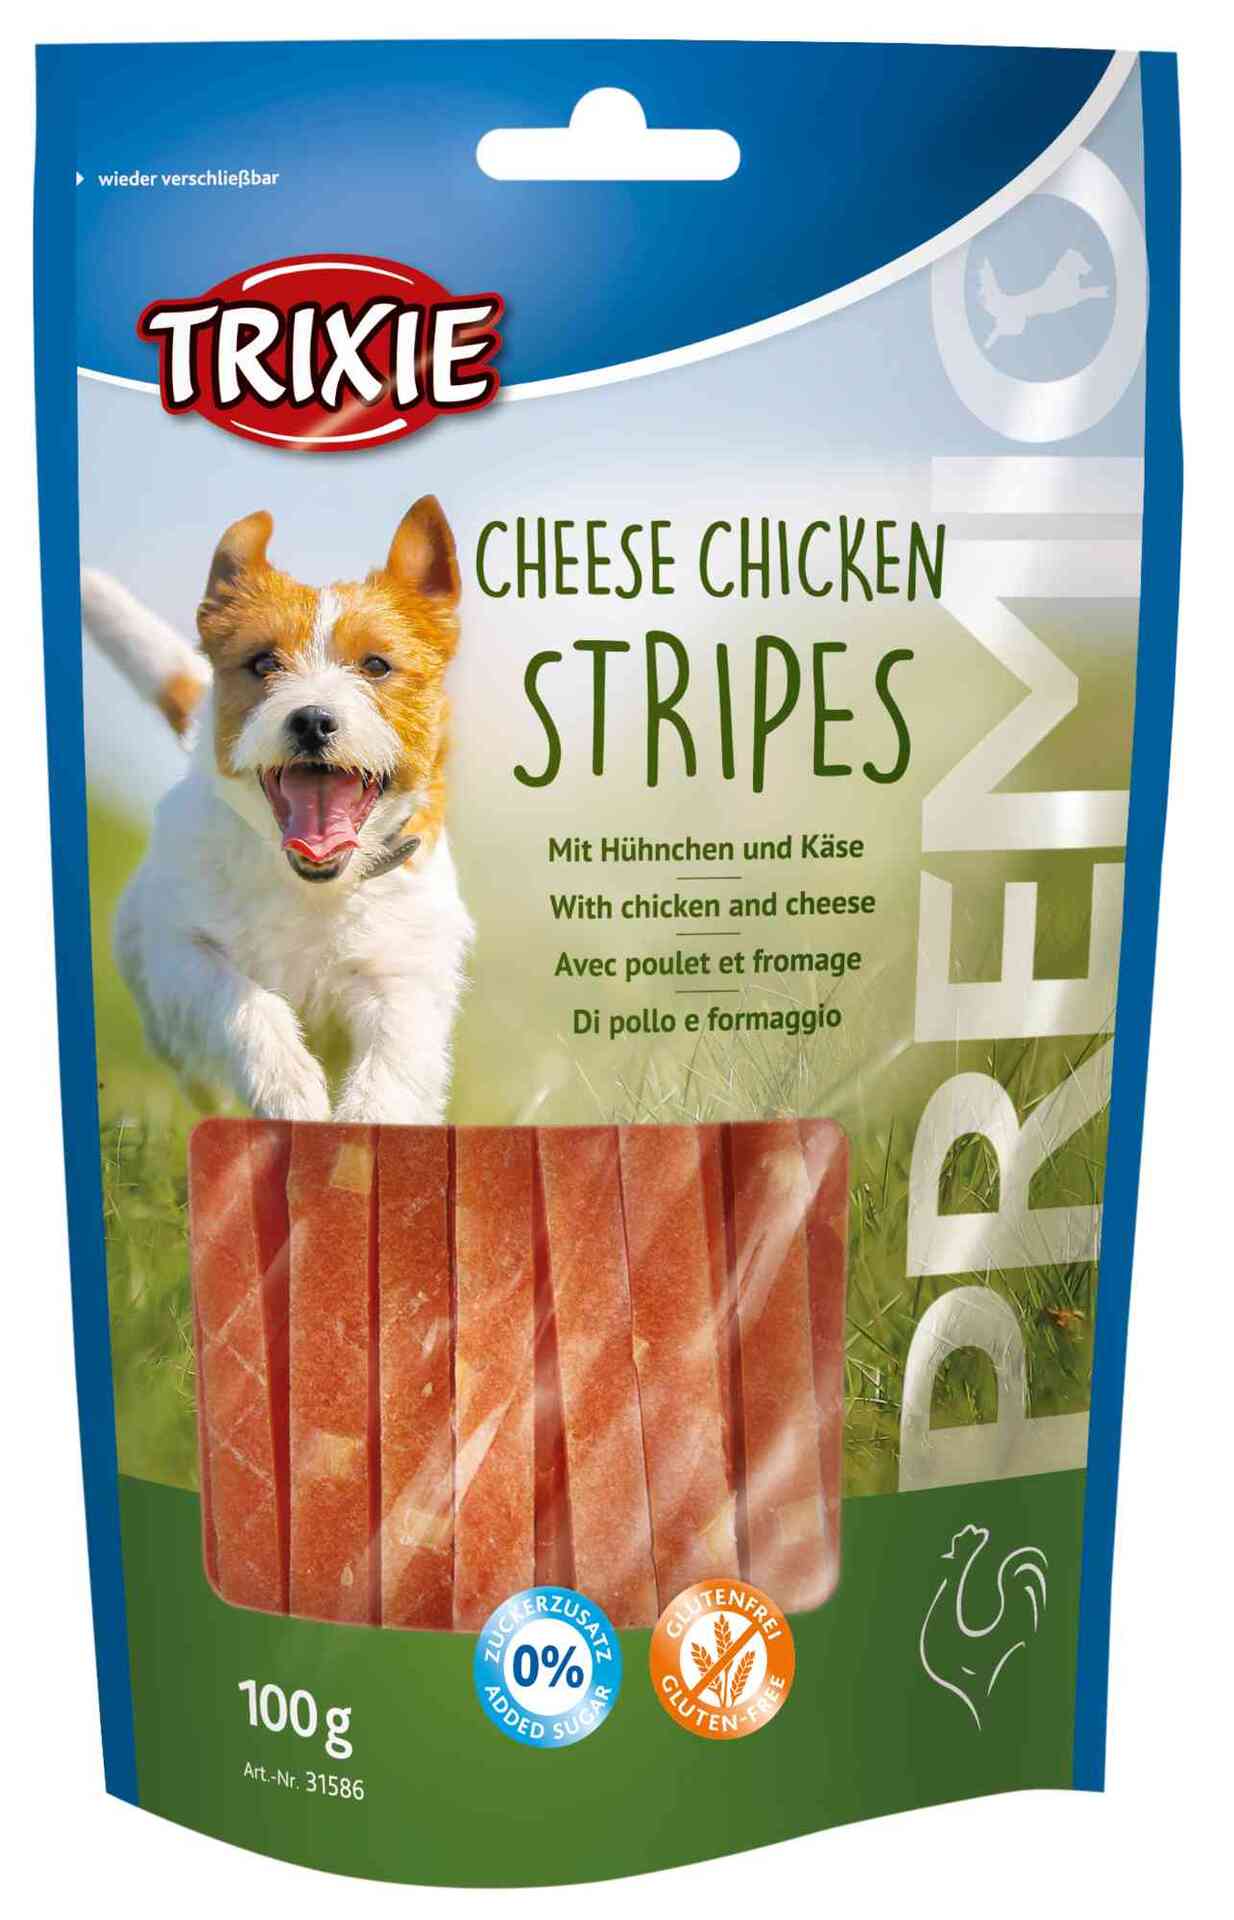 TRIXIE PREMIO Cheese Chicken Stripes